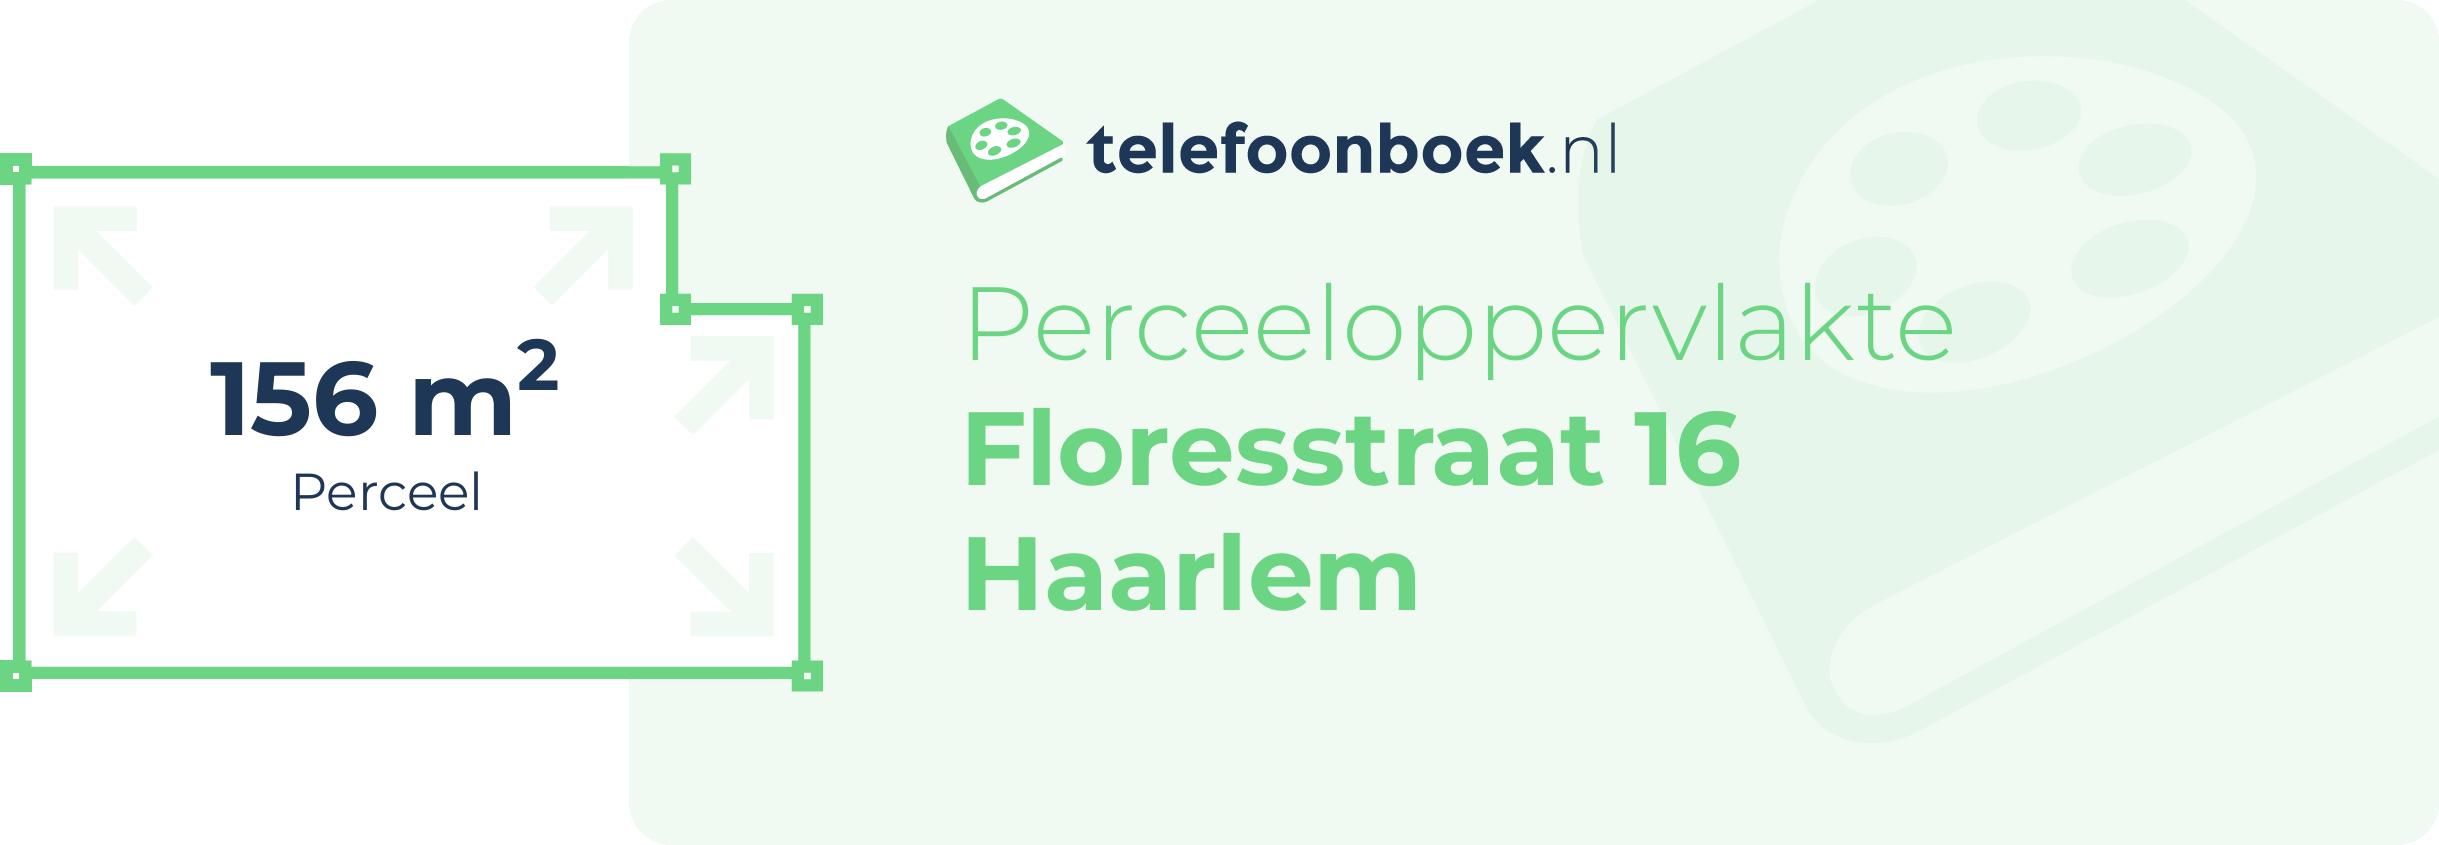 Perceeloppervlakte Floresstraat 16 Haarlem